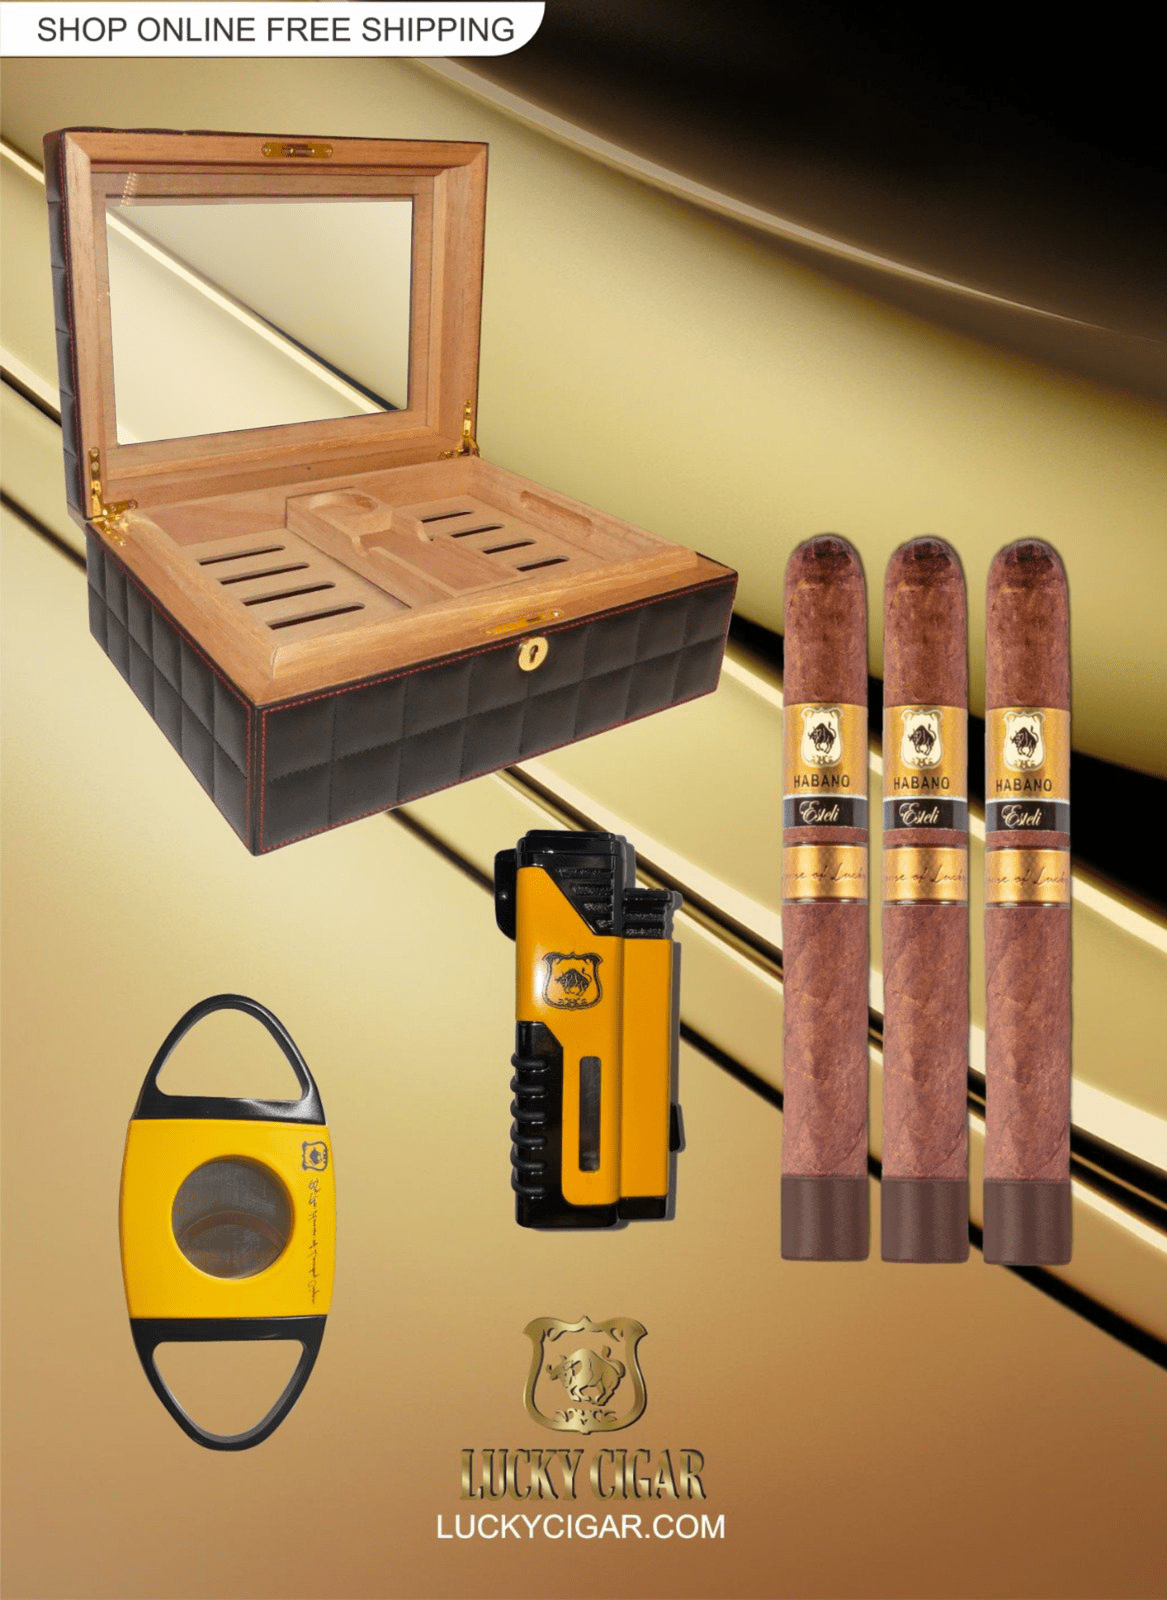 Cigar Gift Sets: 3 Habano Esteli Toro, Desk Humidor, Cutter, Torch